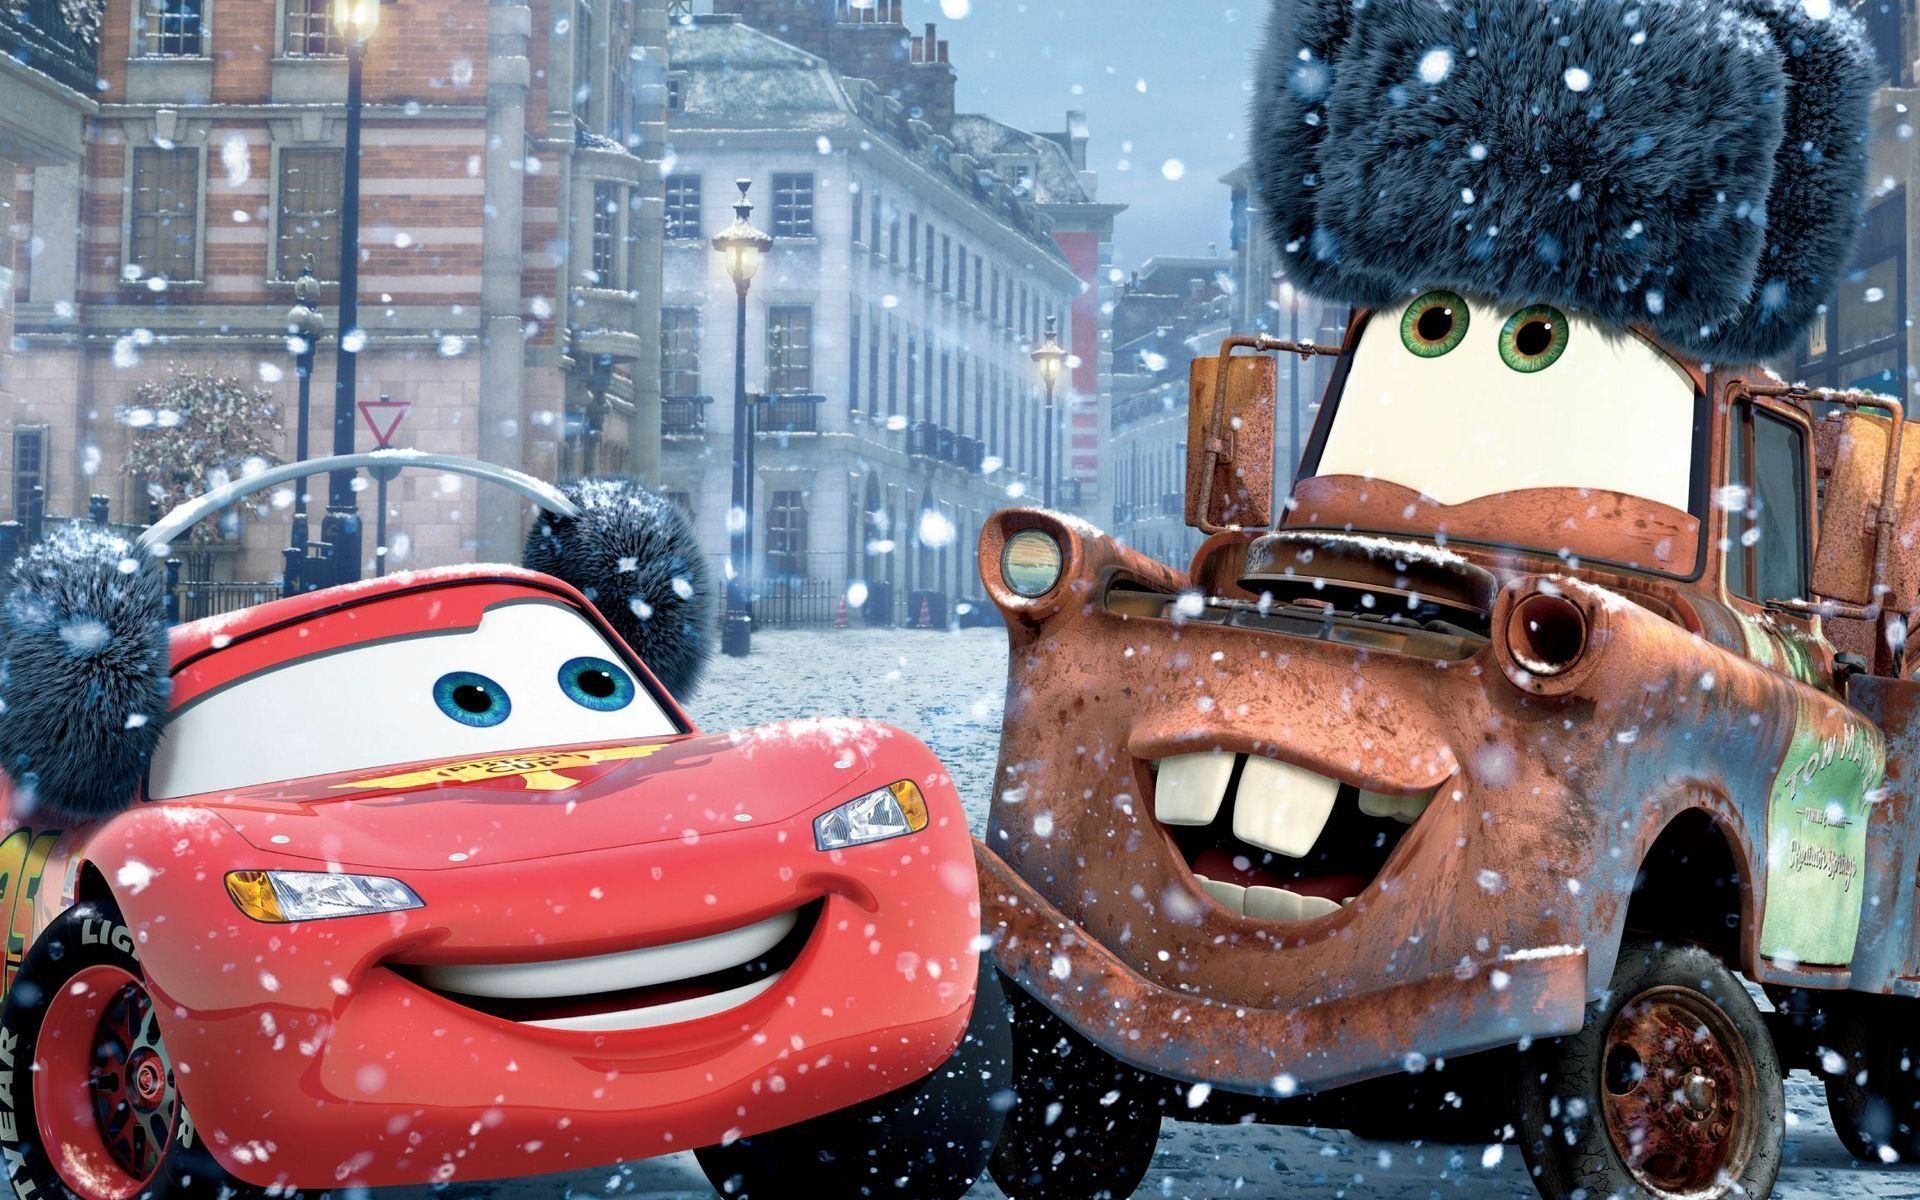 Pixar Christmas Background. Pixar Wallpaper, Disney Pixar Wallpaper and Pixar Christmas Background